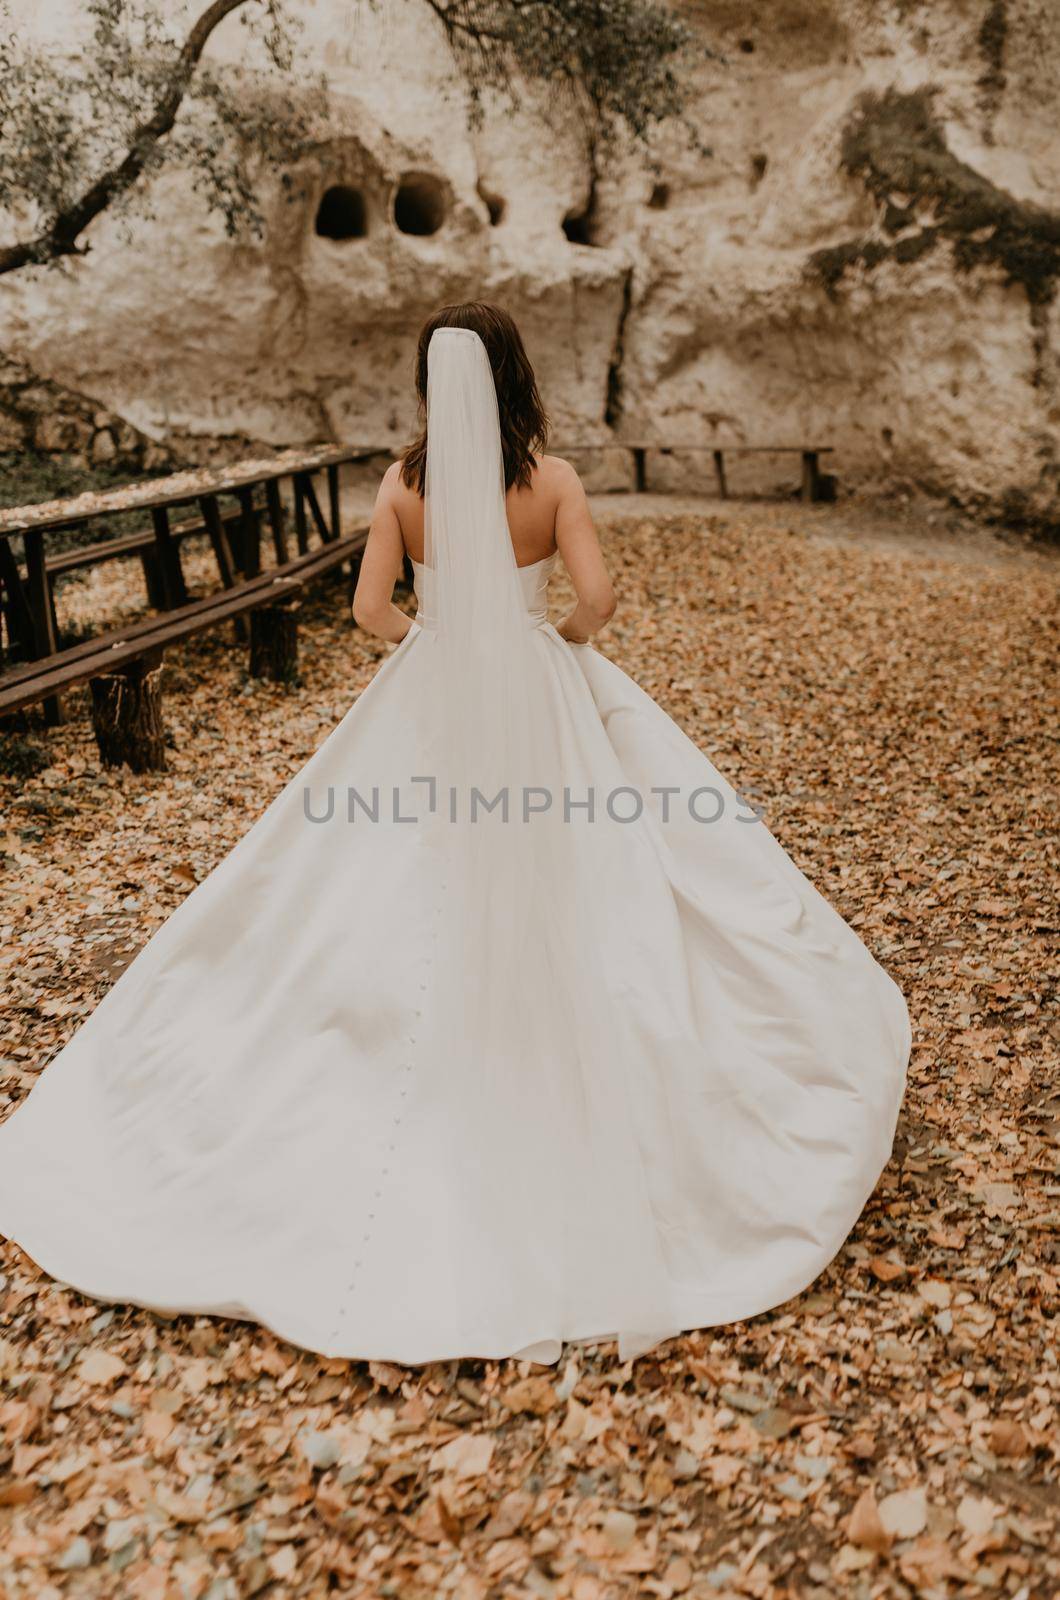 bride in wedding dress run away through autumn forest on fallen orange leaves to mountain by AndriiDrachuk